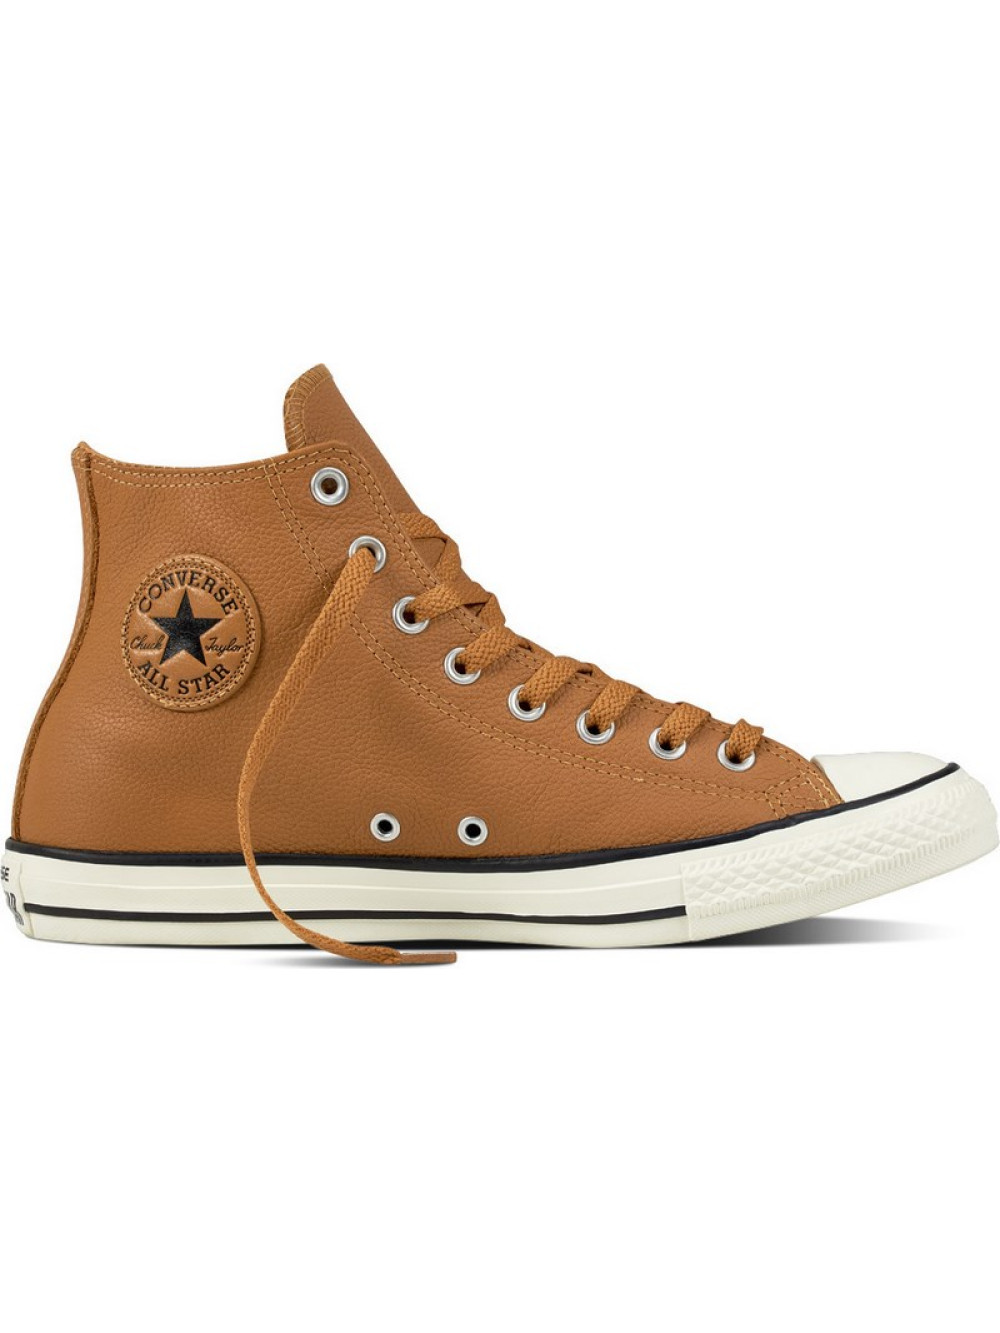 Converse Chuck Taylor All Star Utcai cipő